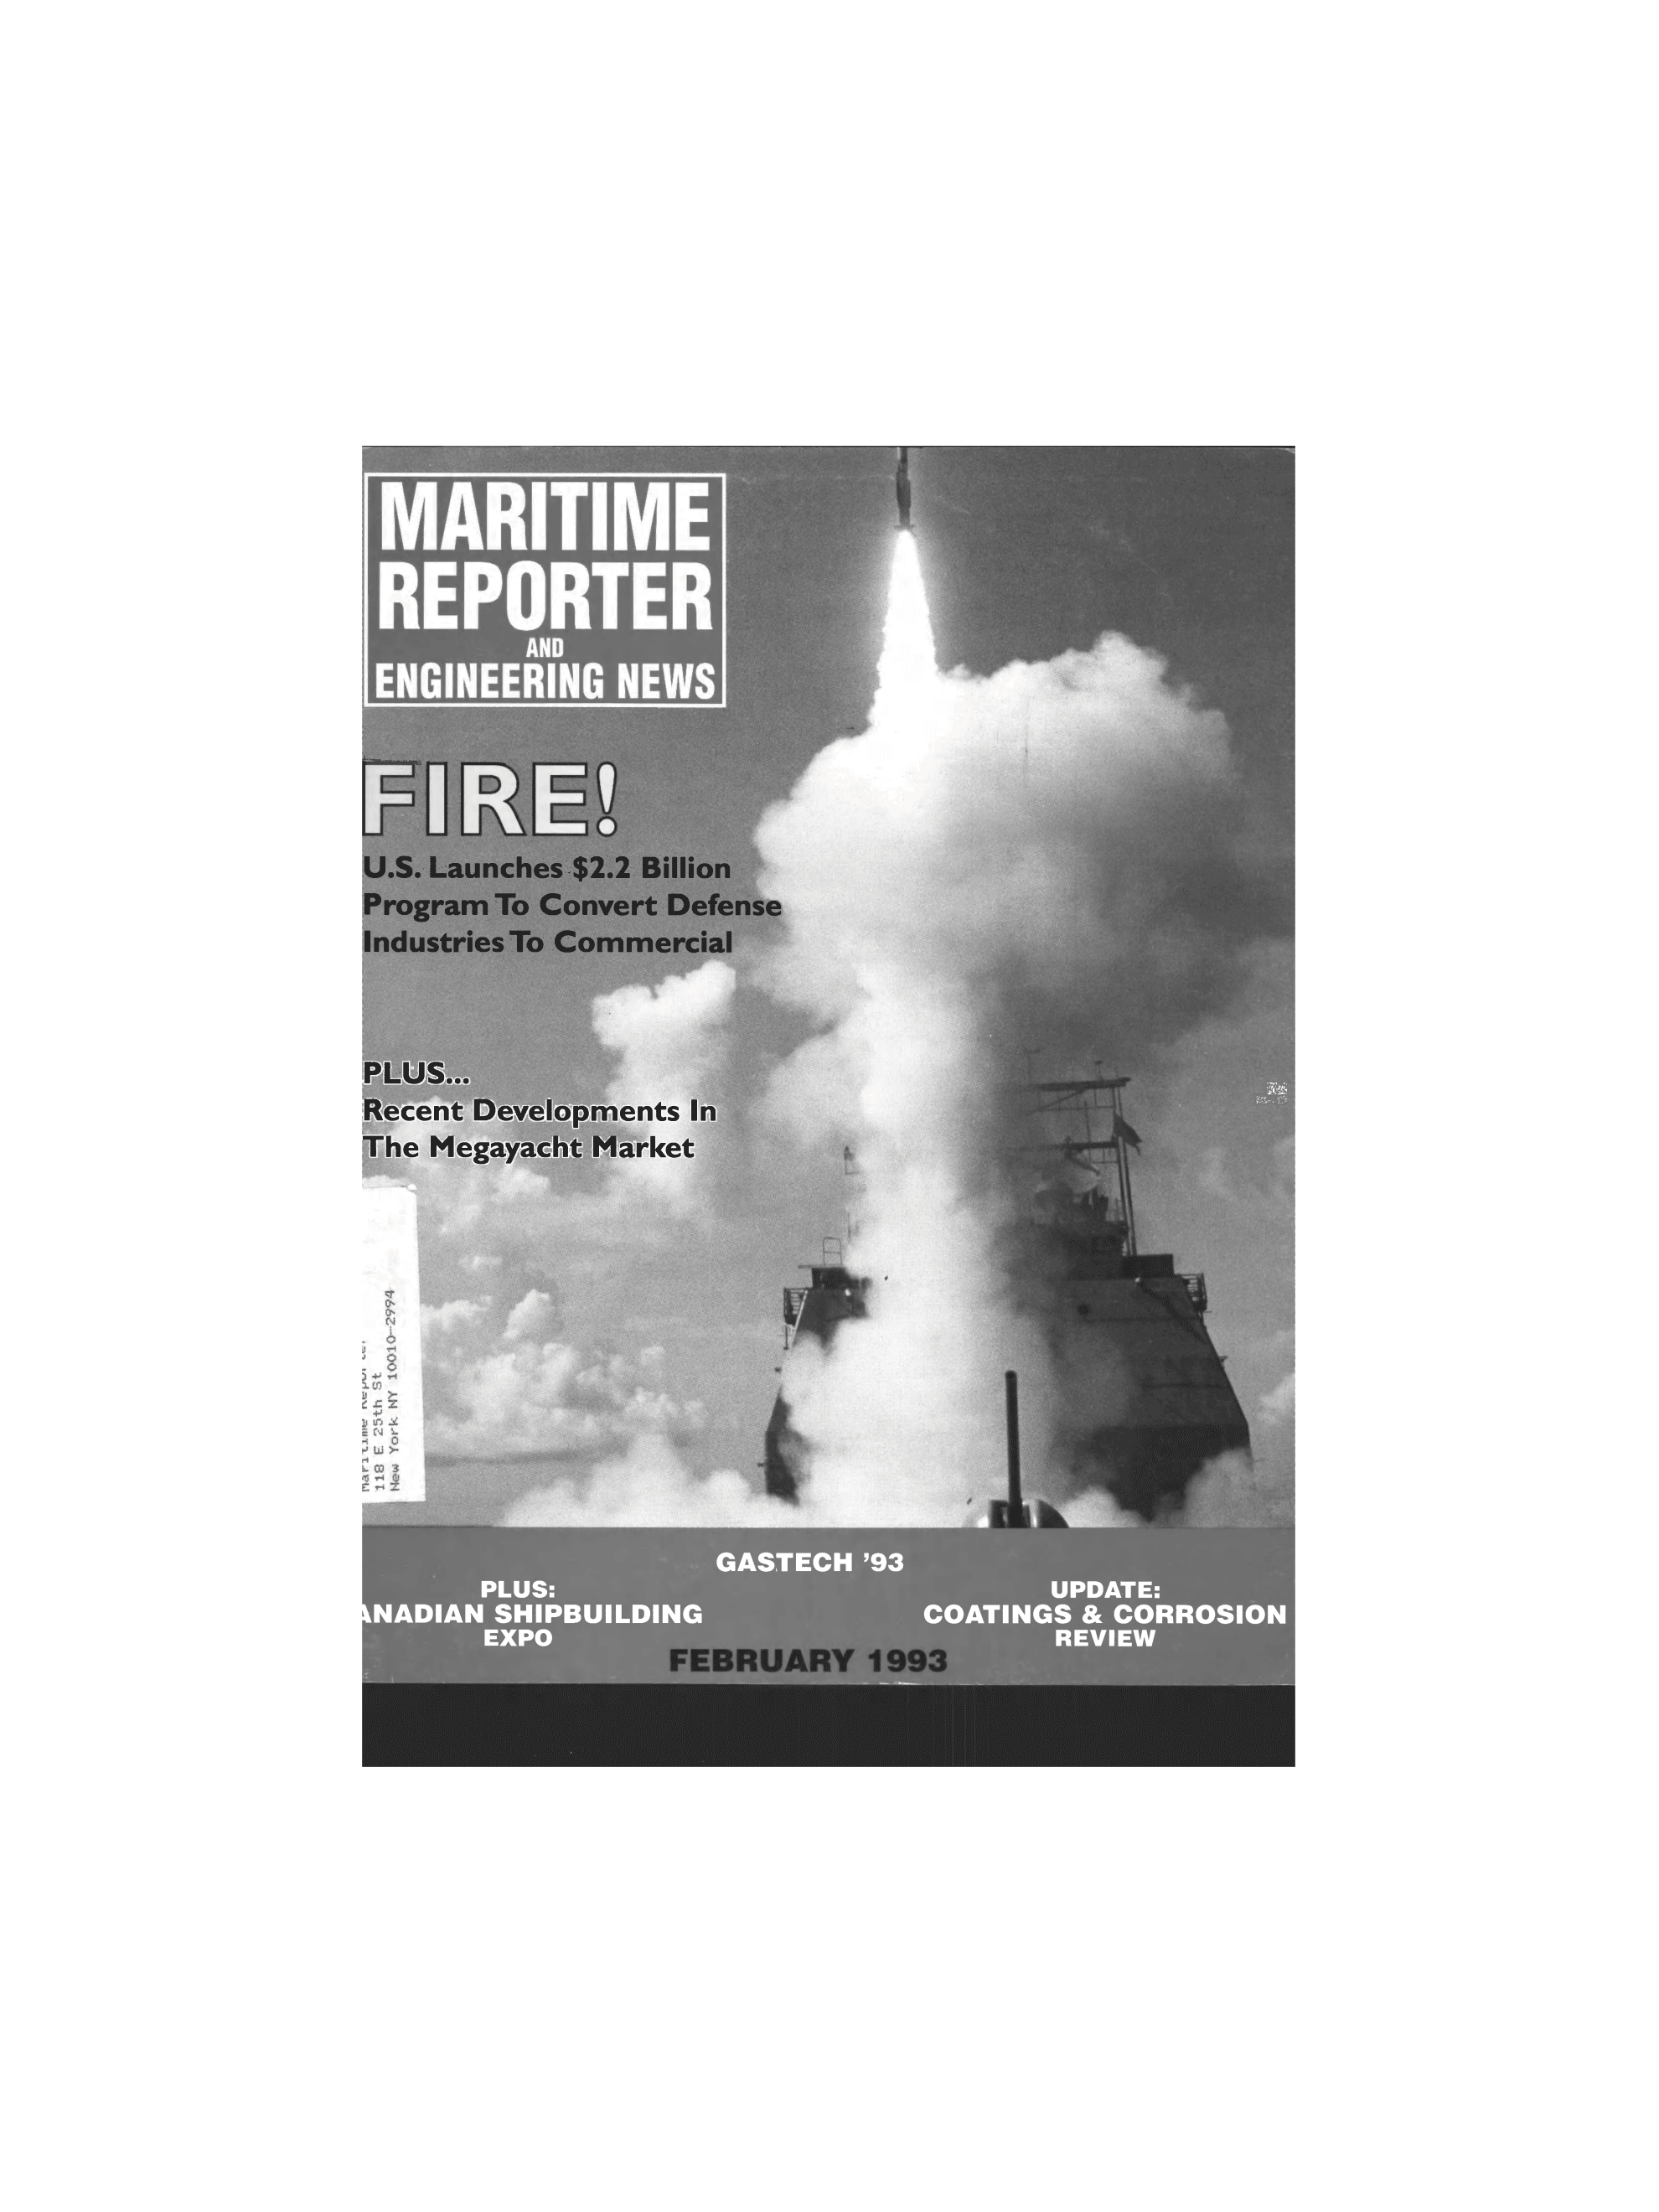 Maritime Reporter Magazine February 1993